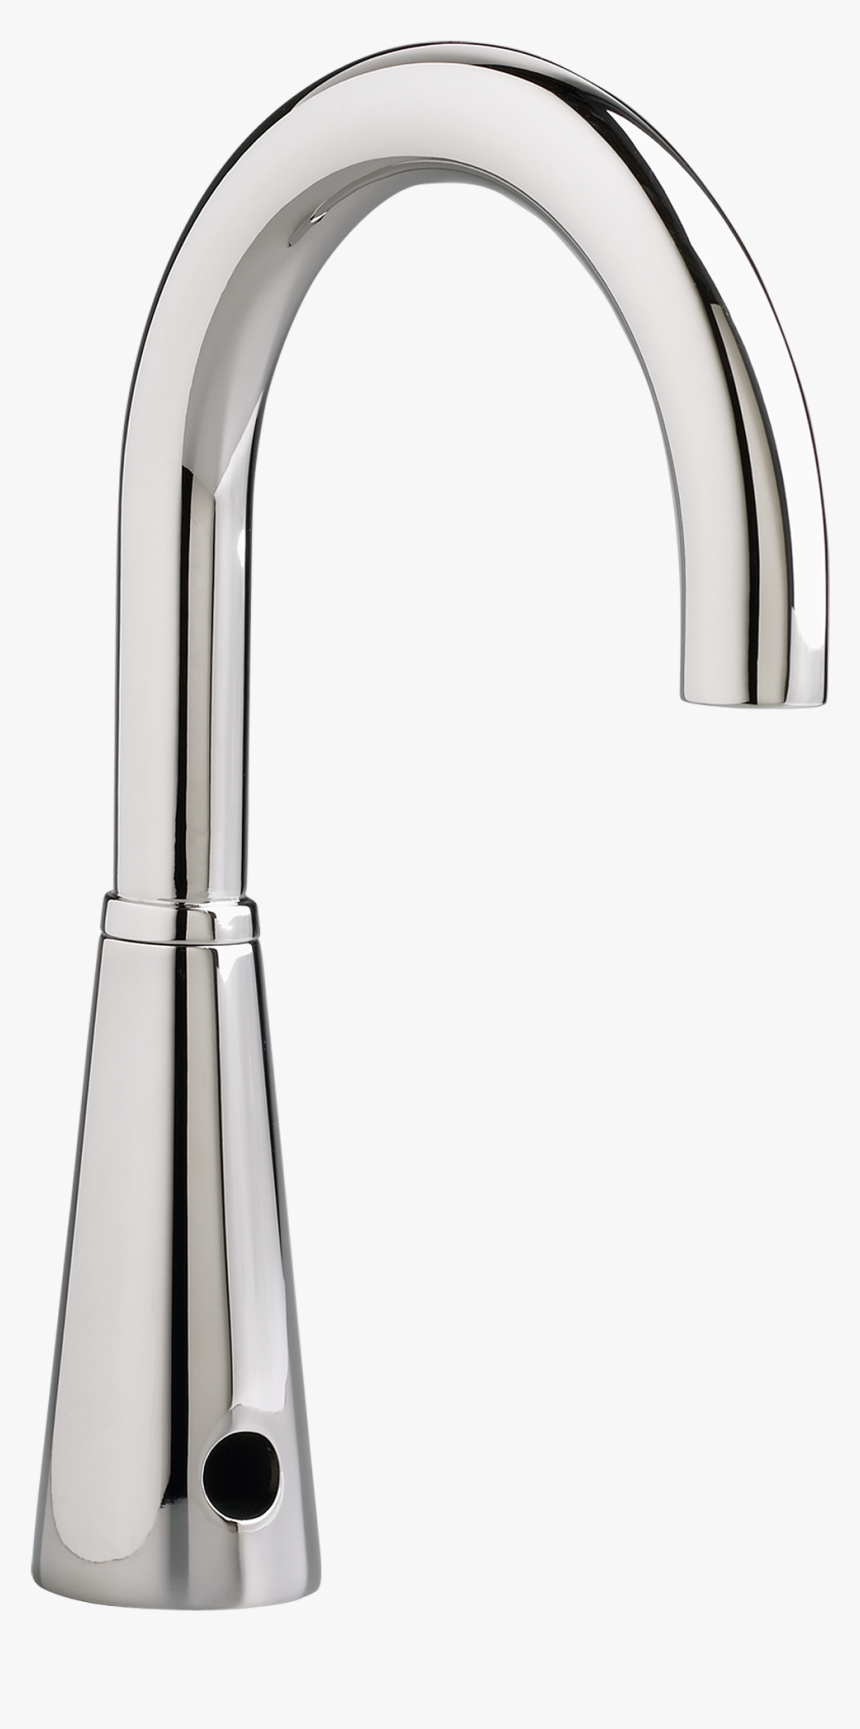 Wash Drawing Faucet - American Standard Sensor Faucet, HD Png Download, Free Download